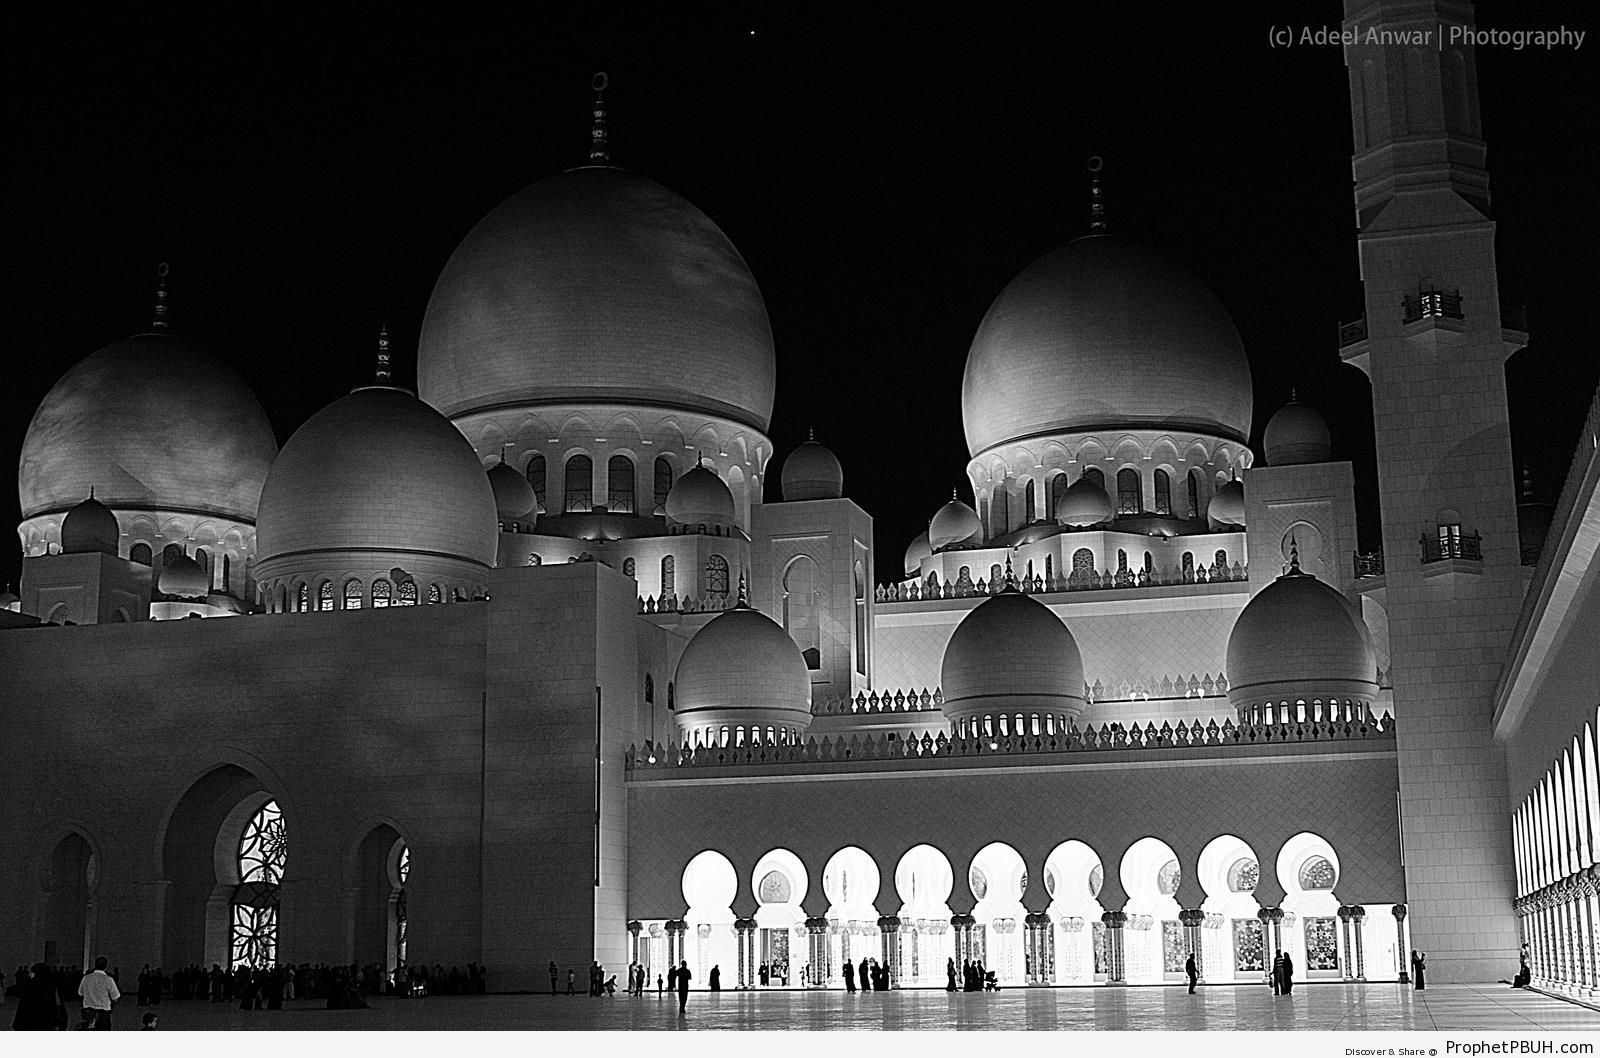 Sheikh Zayed Grand Mosque (Black and White Nighttime Photo) in Abu Dhabi, the UAE - Abu Dhabi, United Arab Emirates -Picture